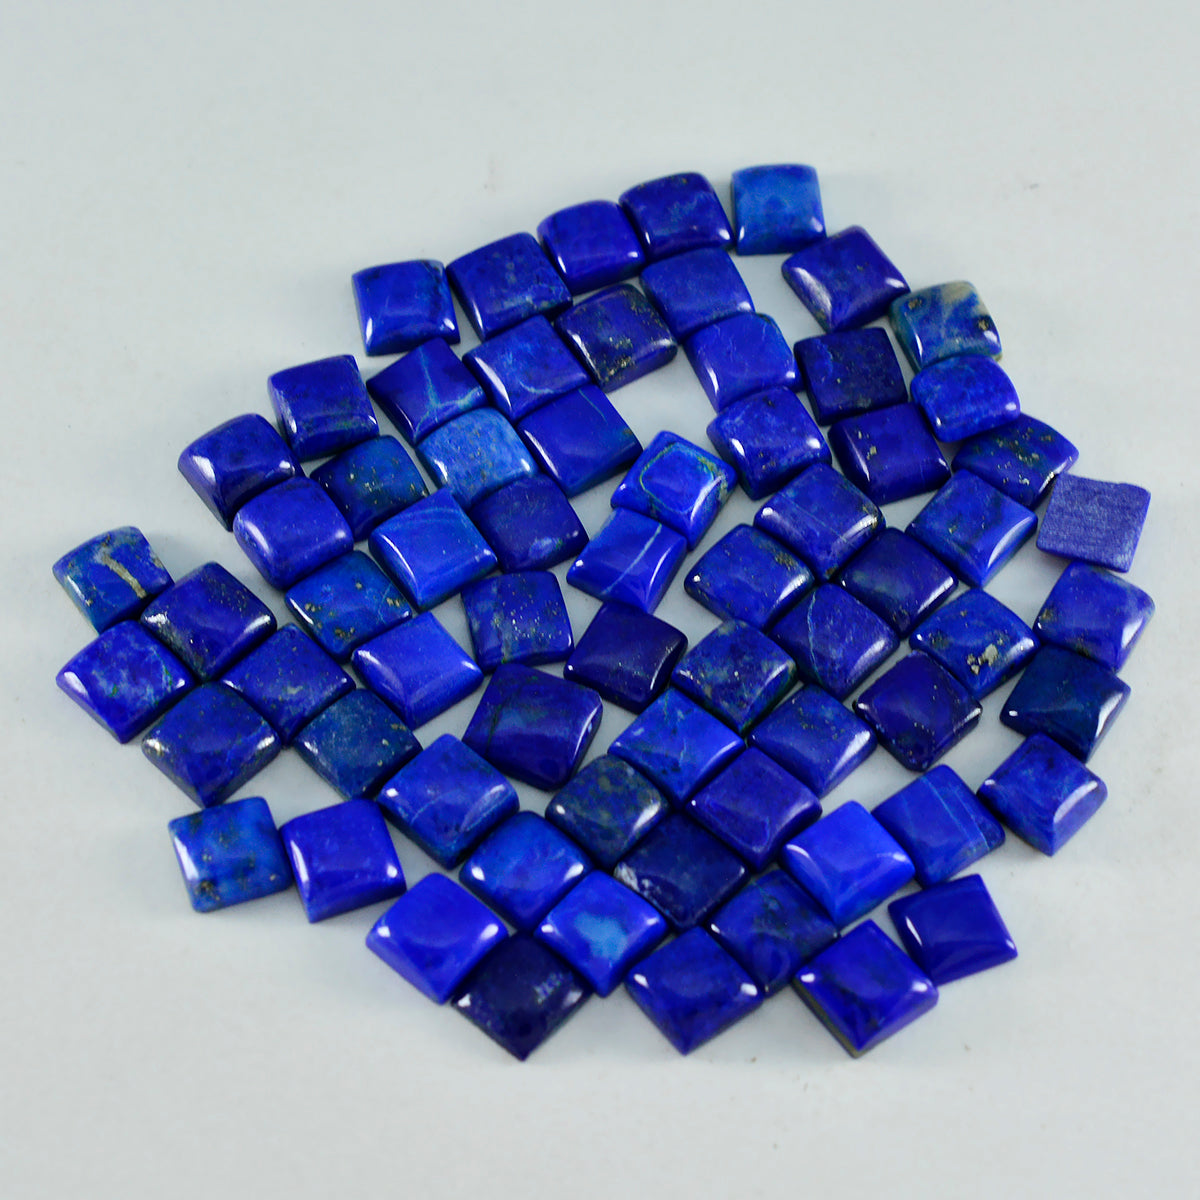 Riyogems 1PC Blue Lapis Lazuli Cabochon 7x7 mm Square Shape beauty Quality Stone